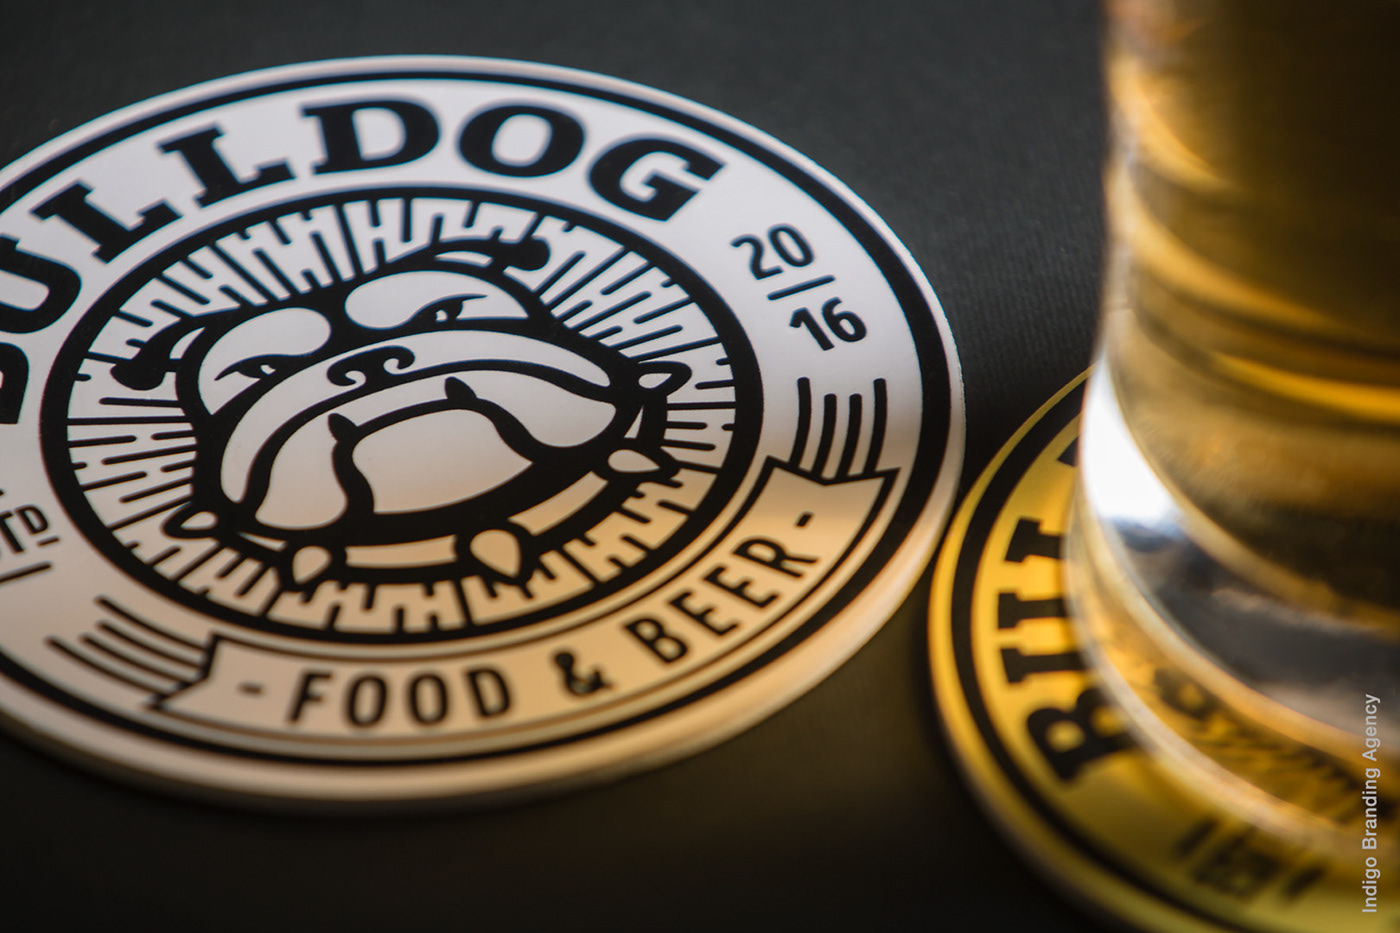 #bulldog #bulldog_yerevan #Branding #logo_yerevan #Logo_design #Pub #food    #beer #graphic_design #tasty